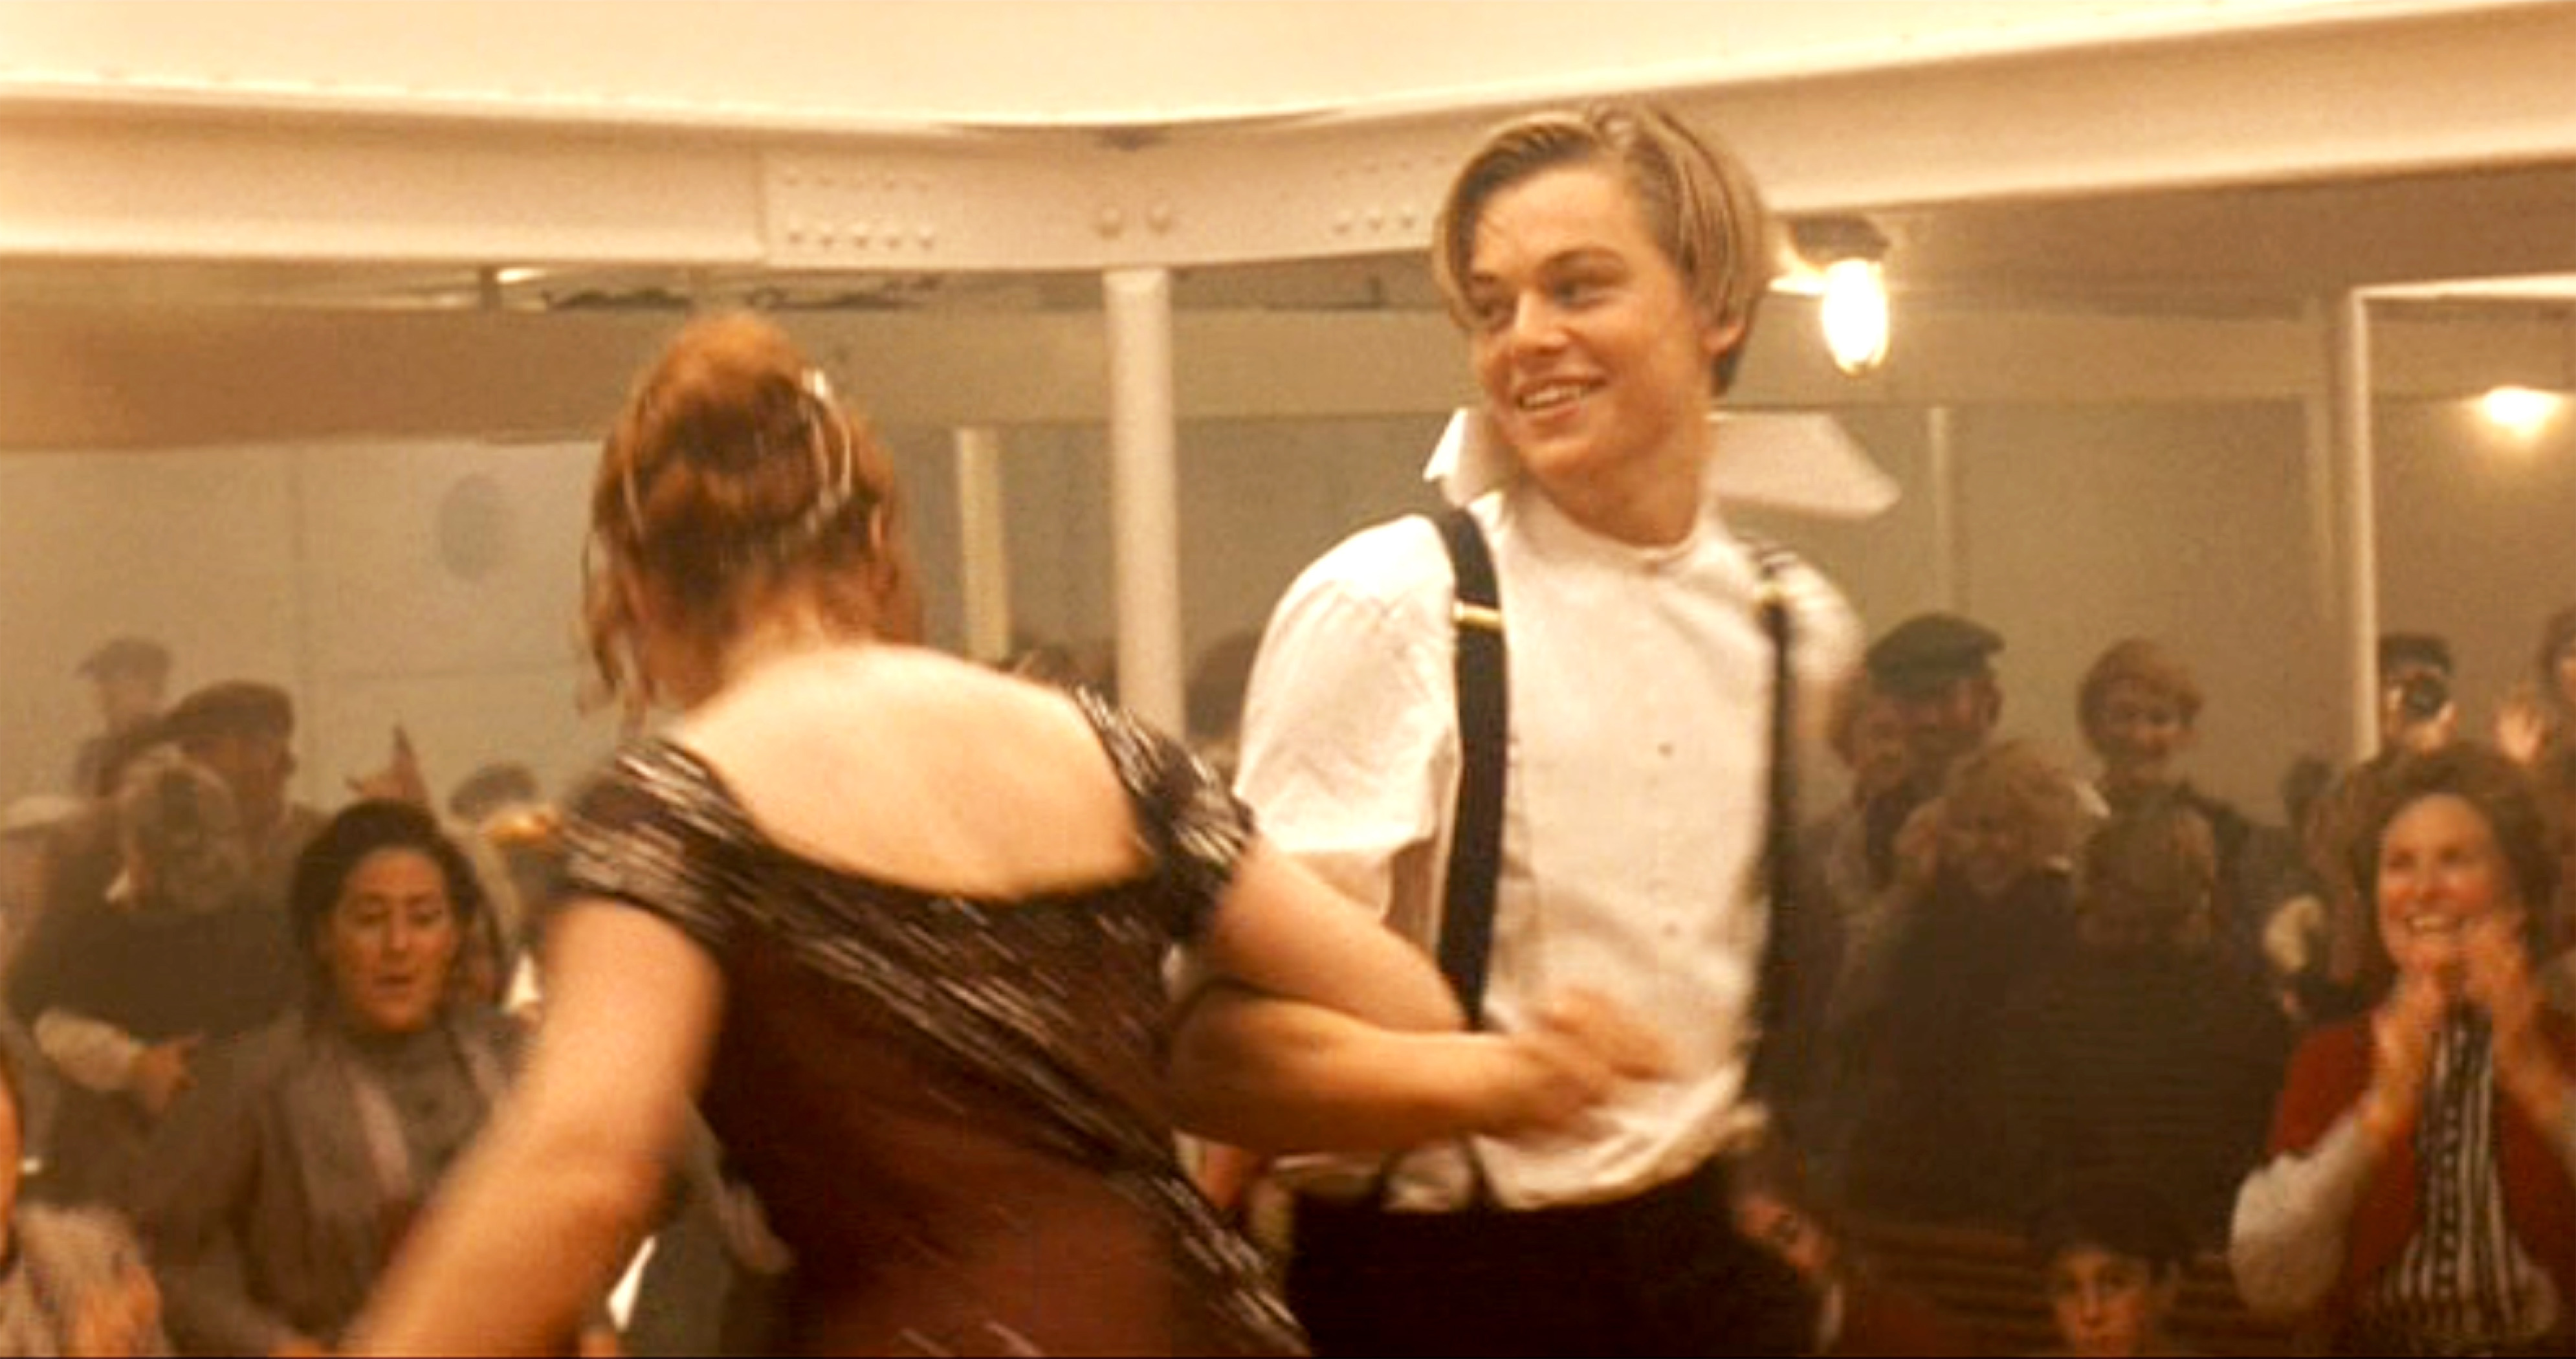 Titanic scene of Leonardo DiCaprio and Kate Winslet dancing